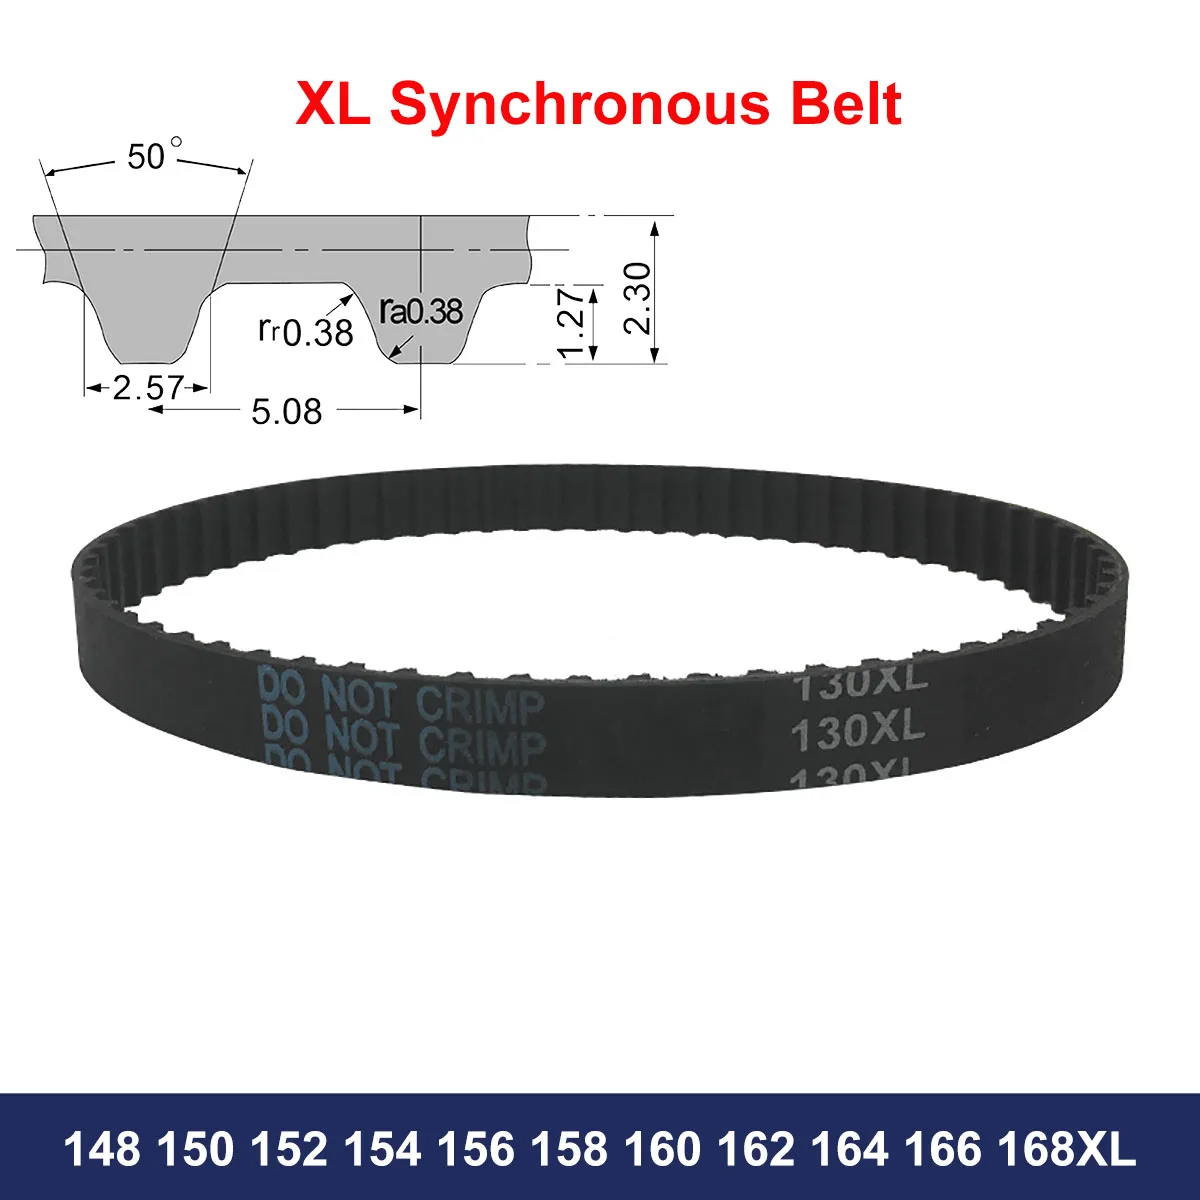 

1Pcs XL Timing Belt 148 150 152 154 156 158 160 162 164 166 168XL Width 10mm 12.7mm Rubber Synchronous Belt Drive Belt